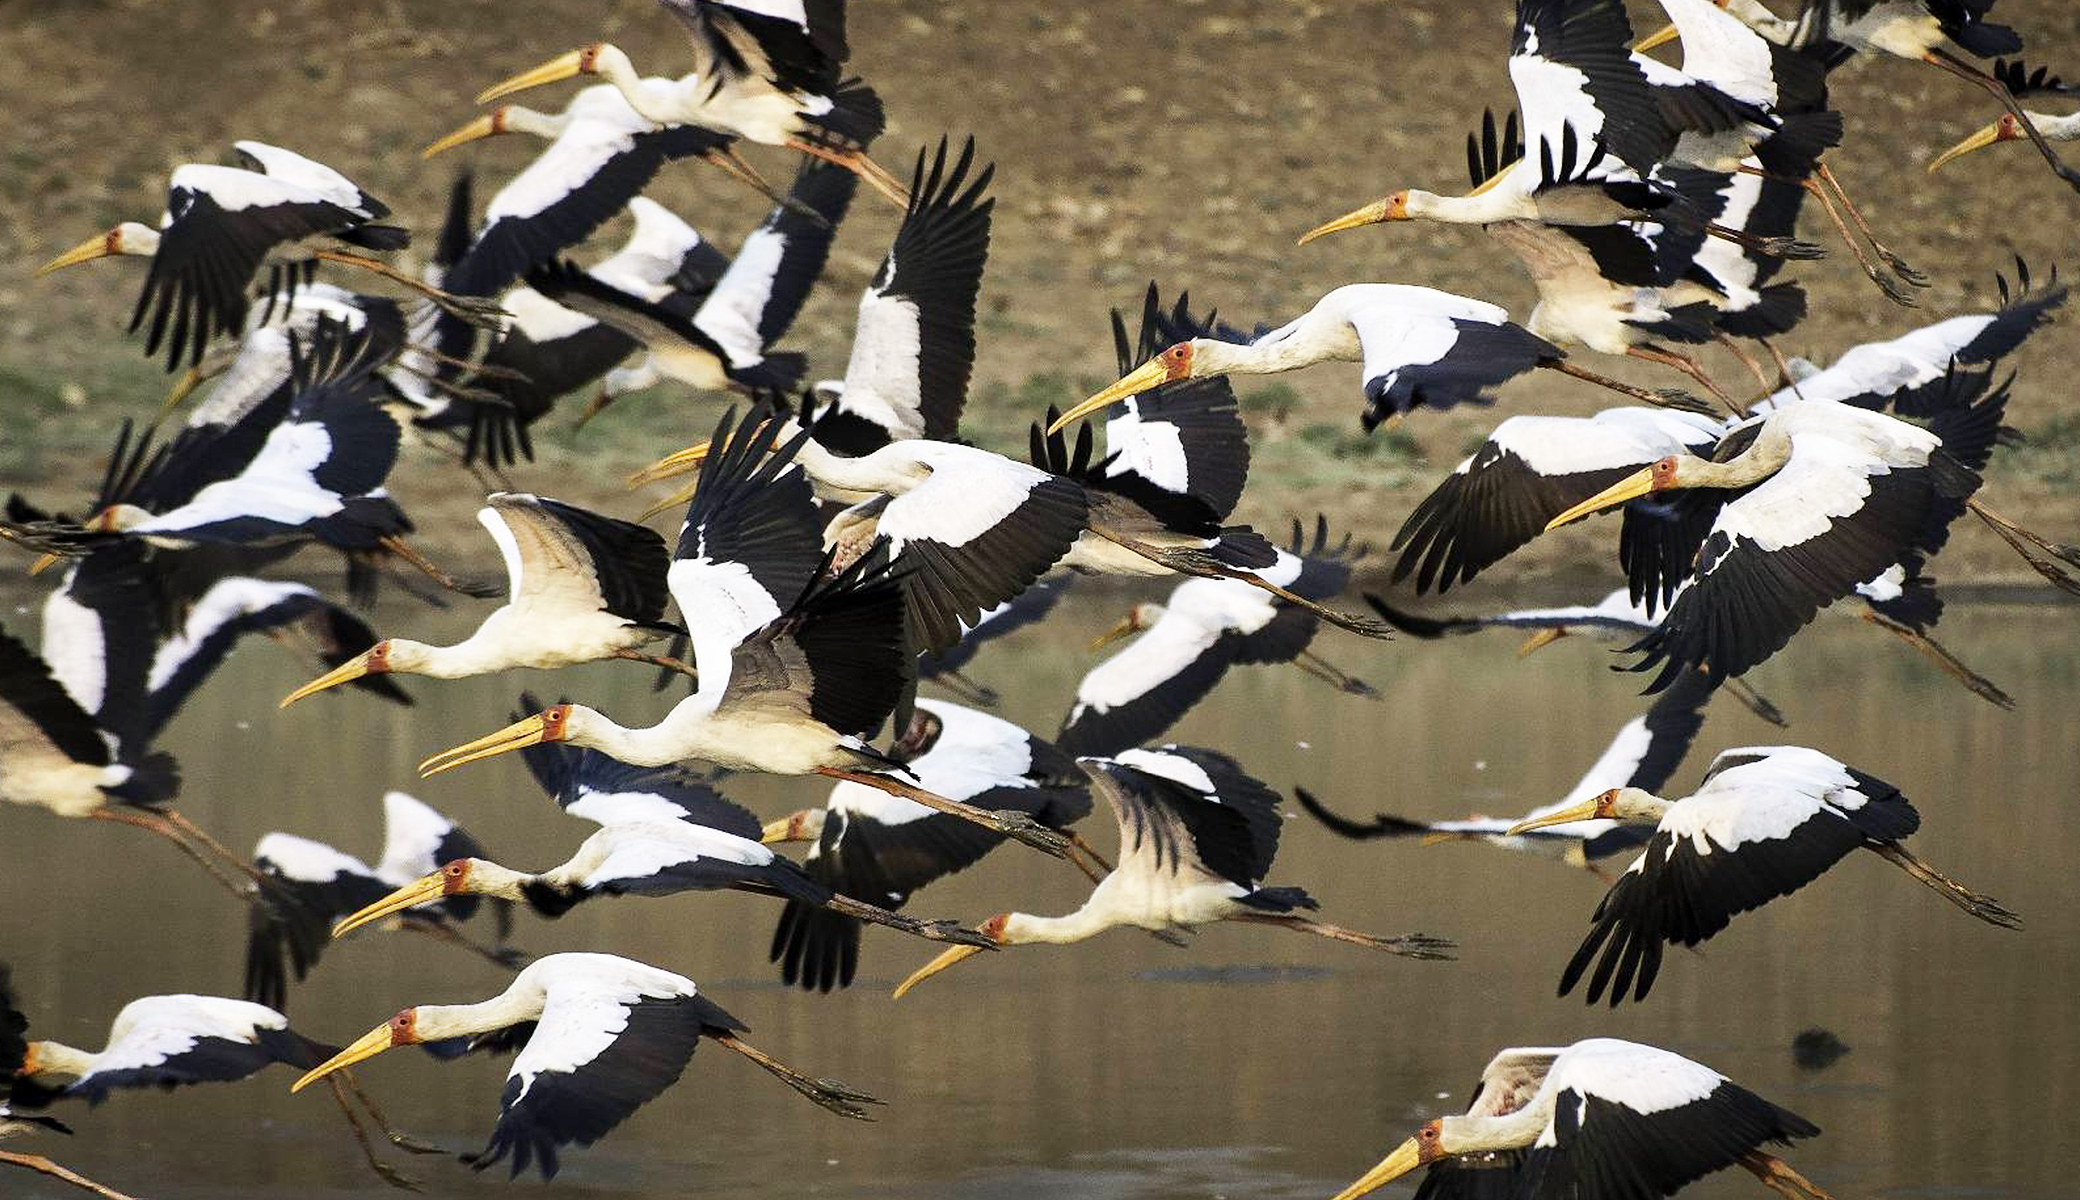 Flying flock of storks, Zambia